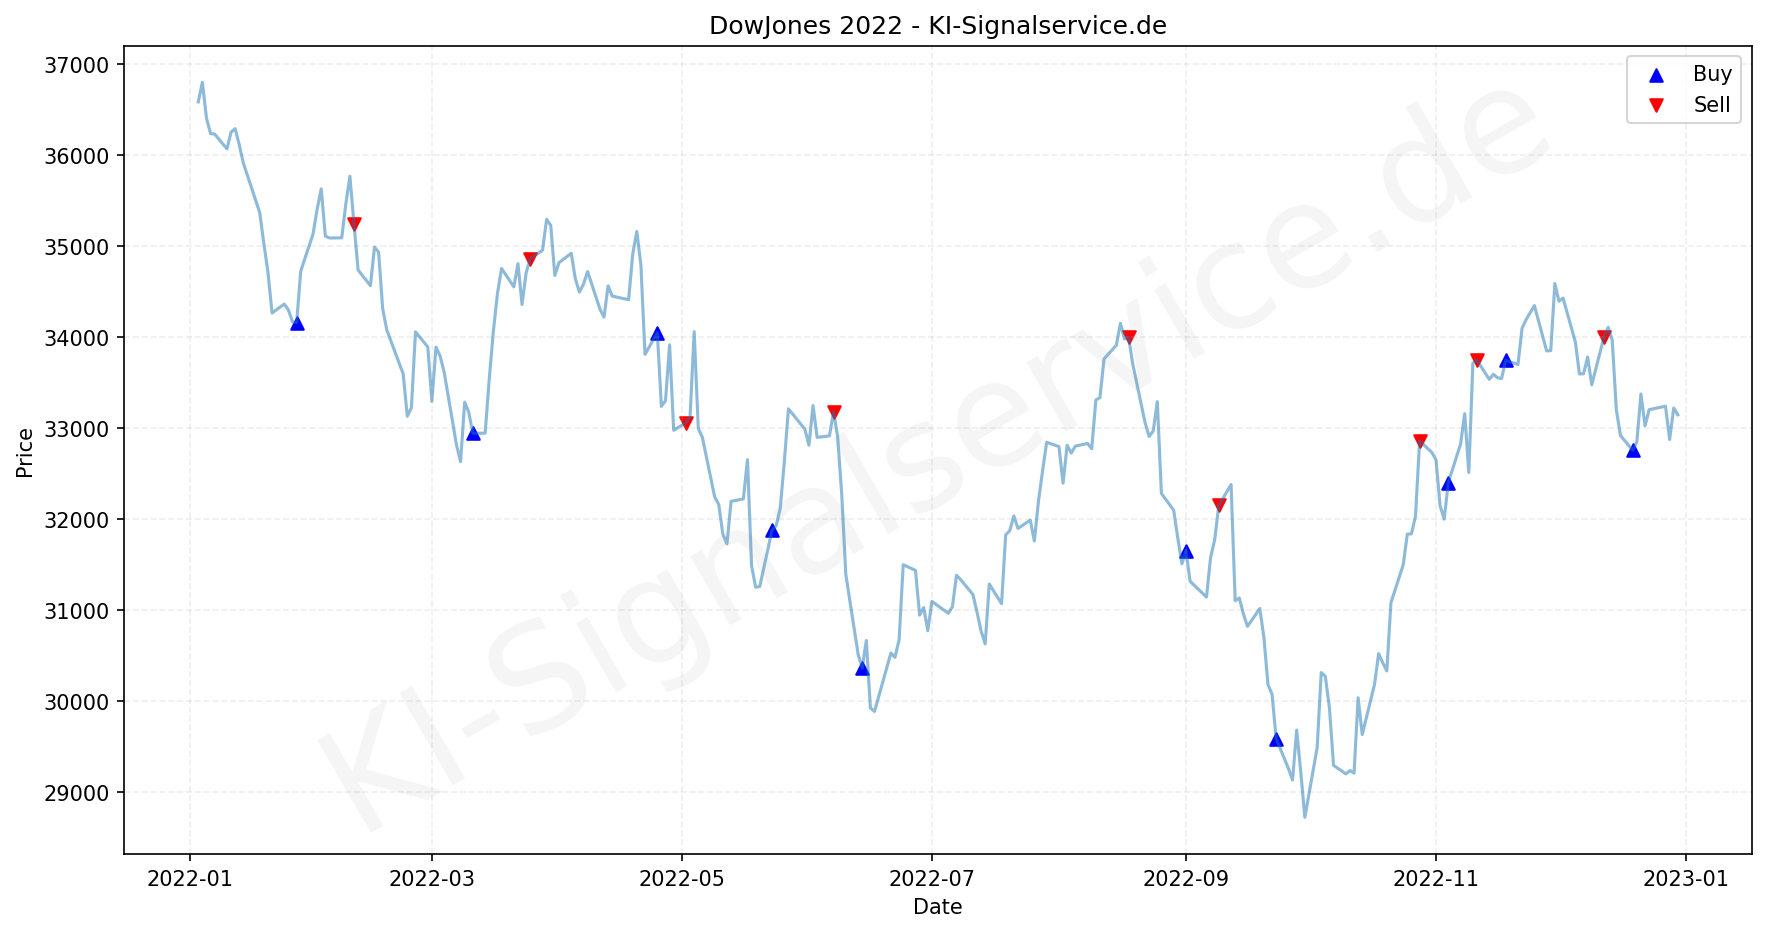 DOWJONES Index Performance Chart - KI Tradingsignale 2022